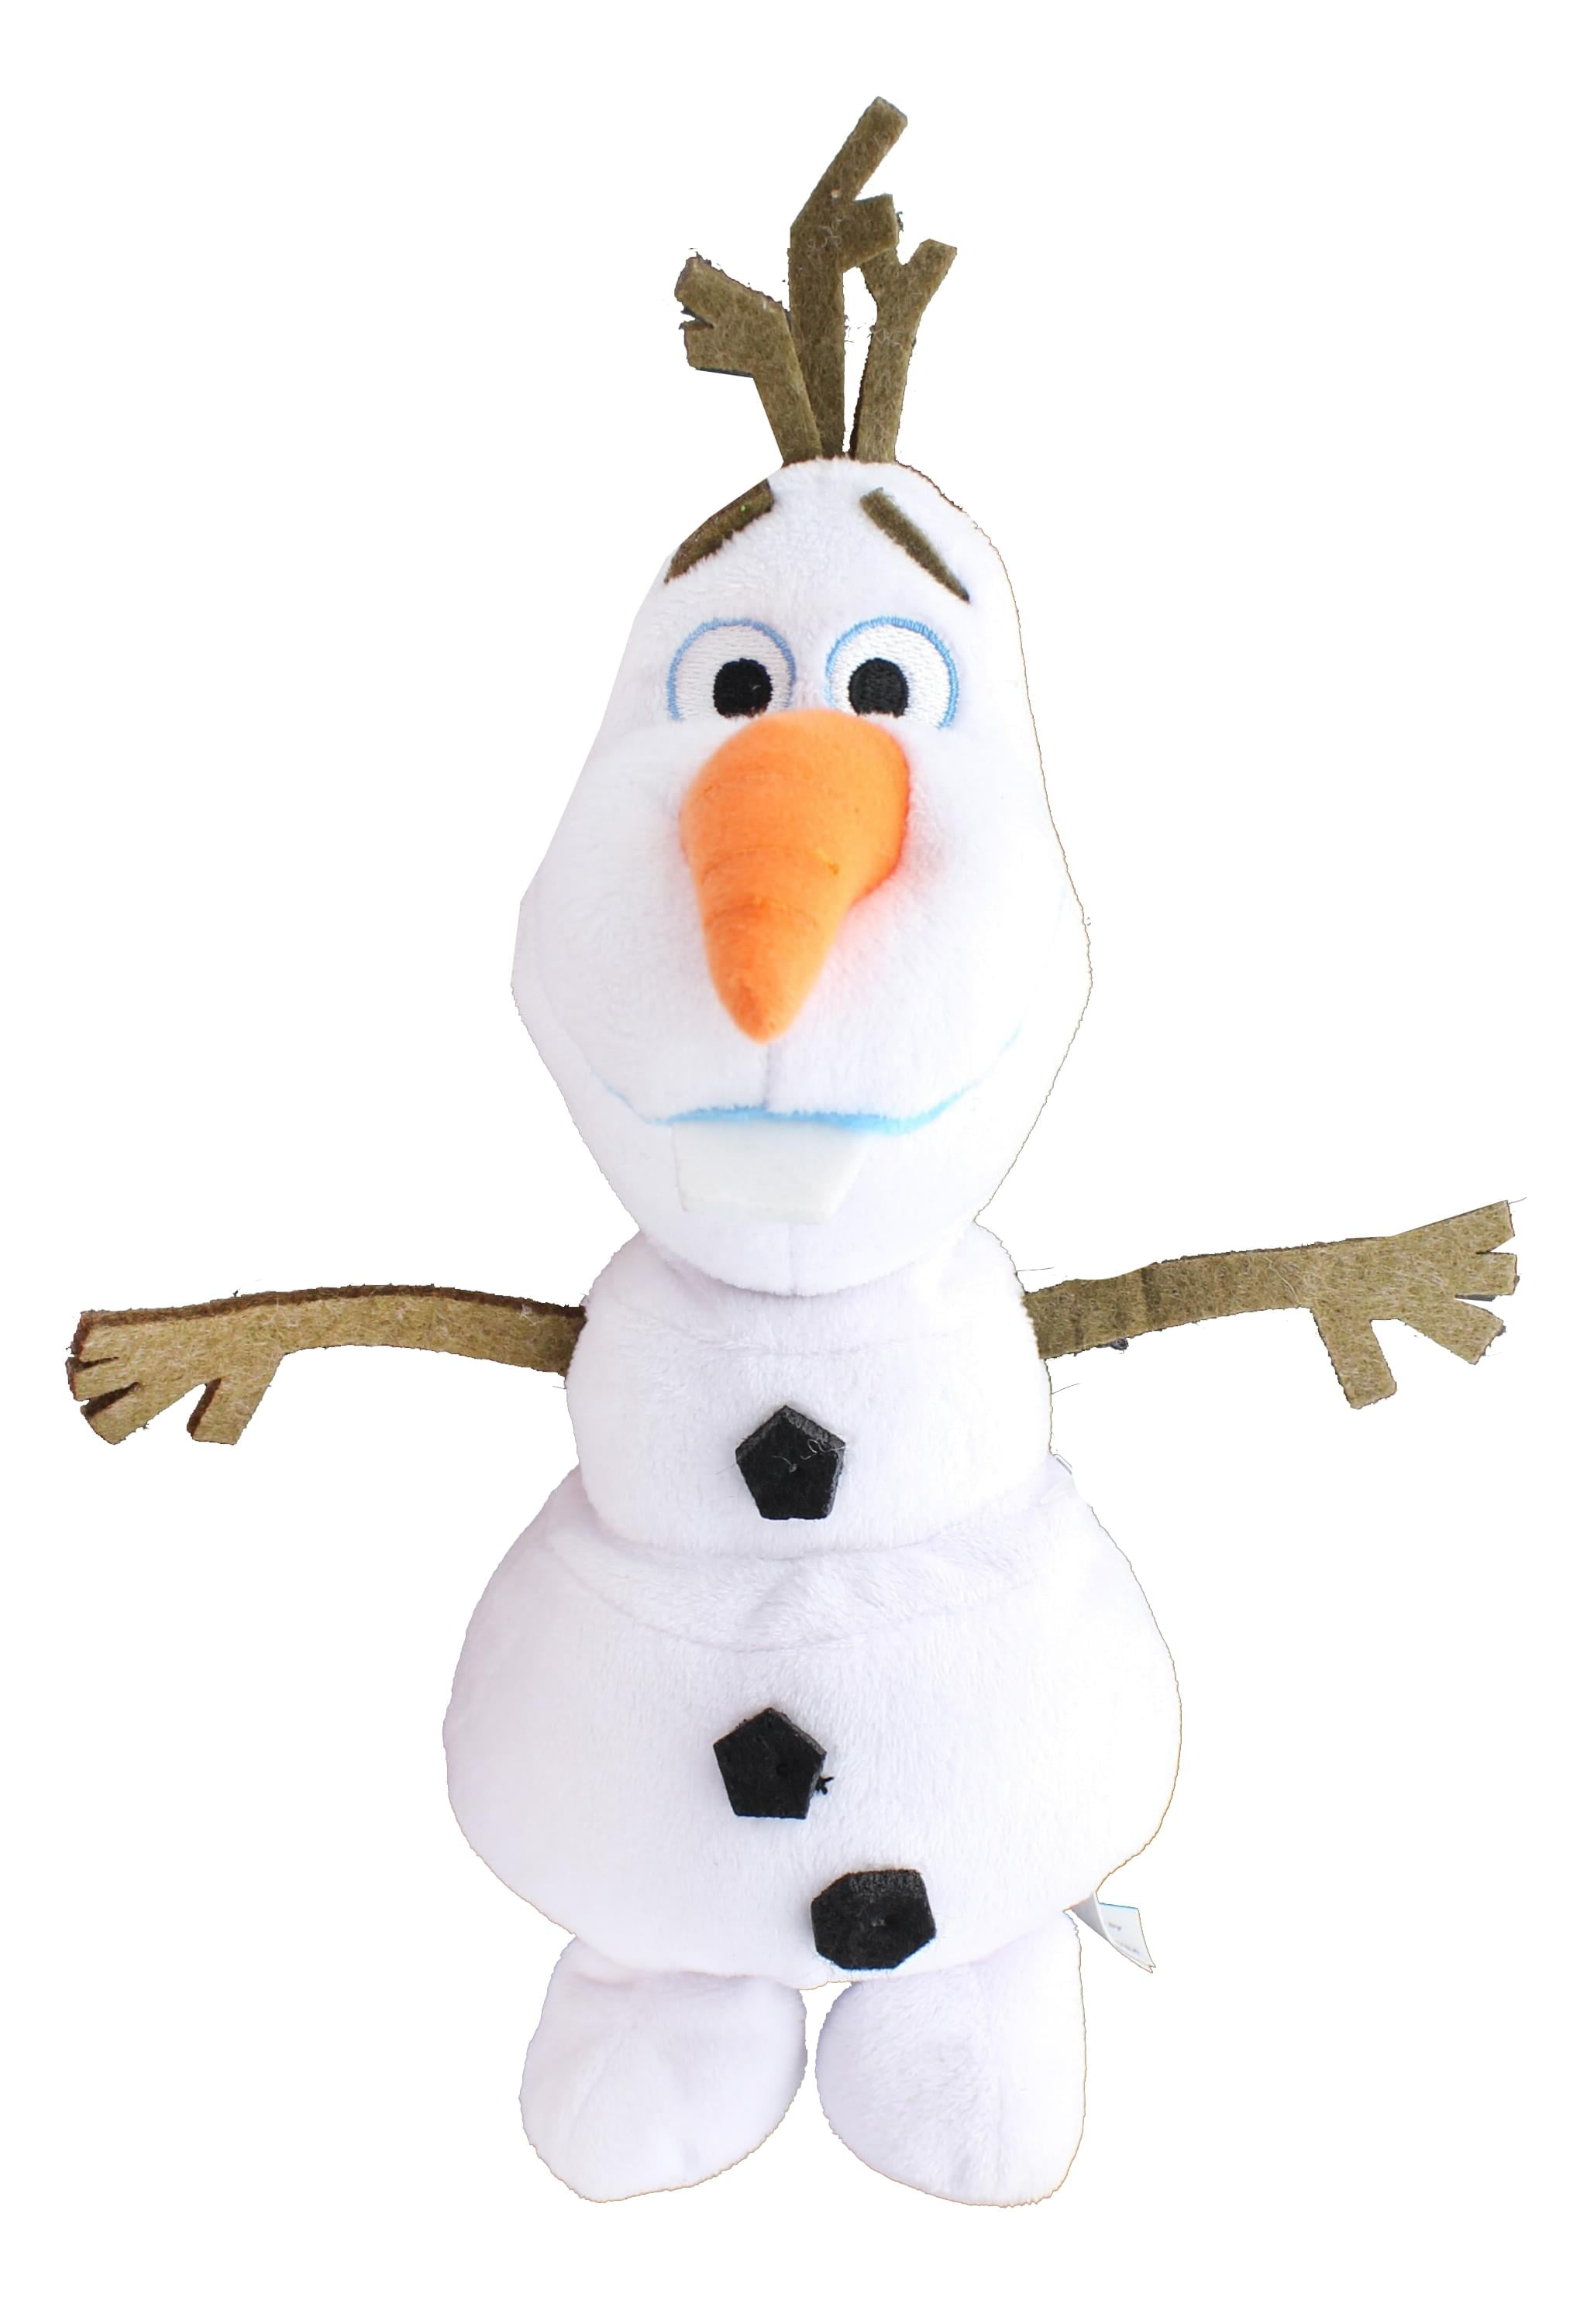 Disney Frozen Olaf Talking Bean Plush